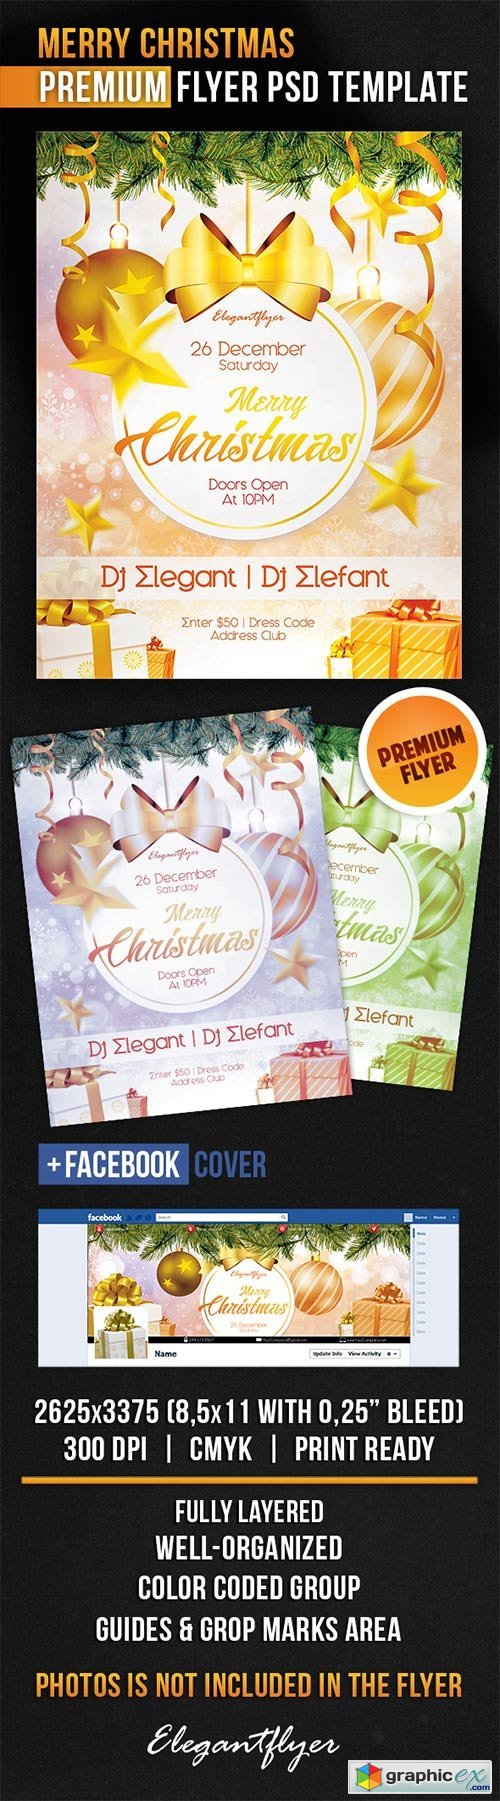 Merry Christmas Flyer PSD Template + Facebook Cover